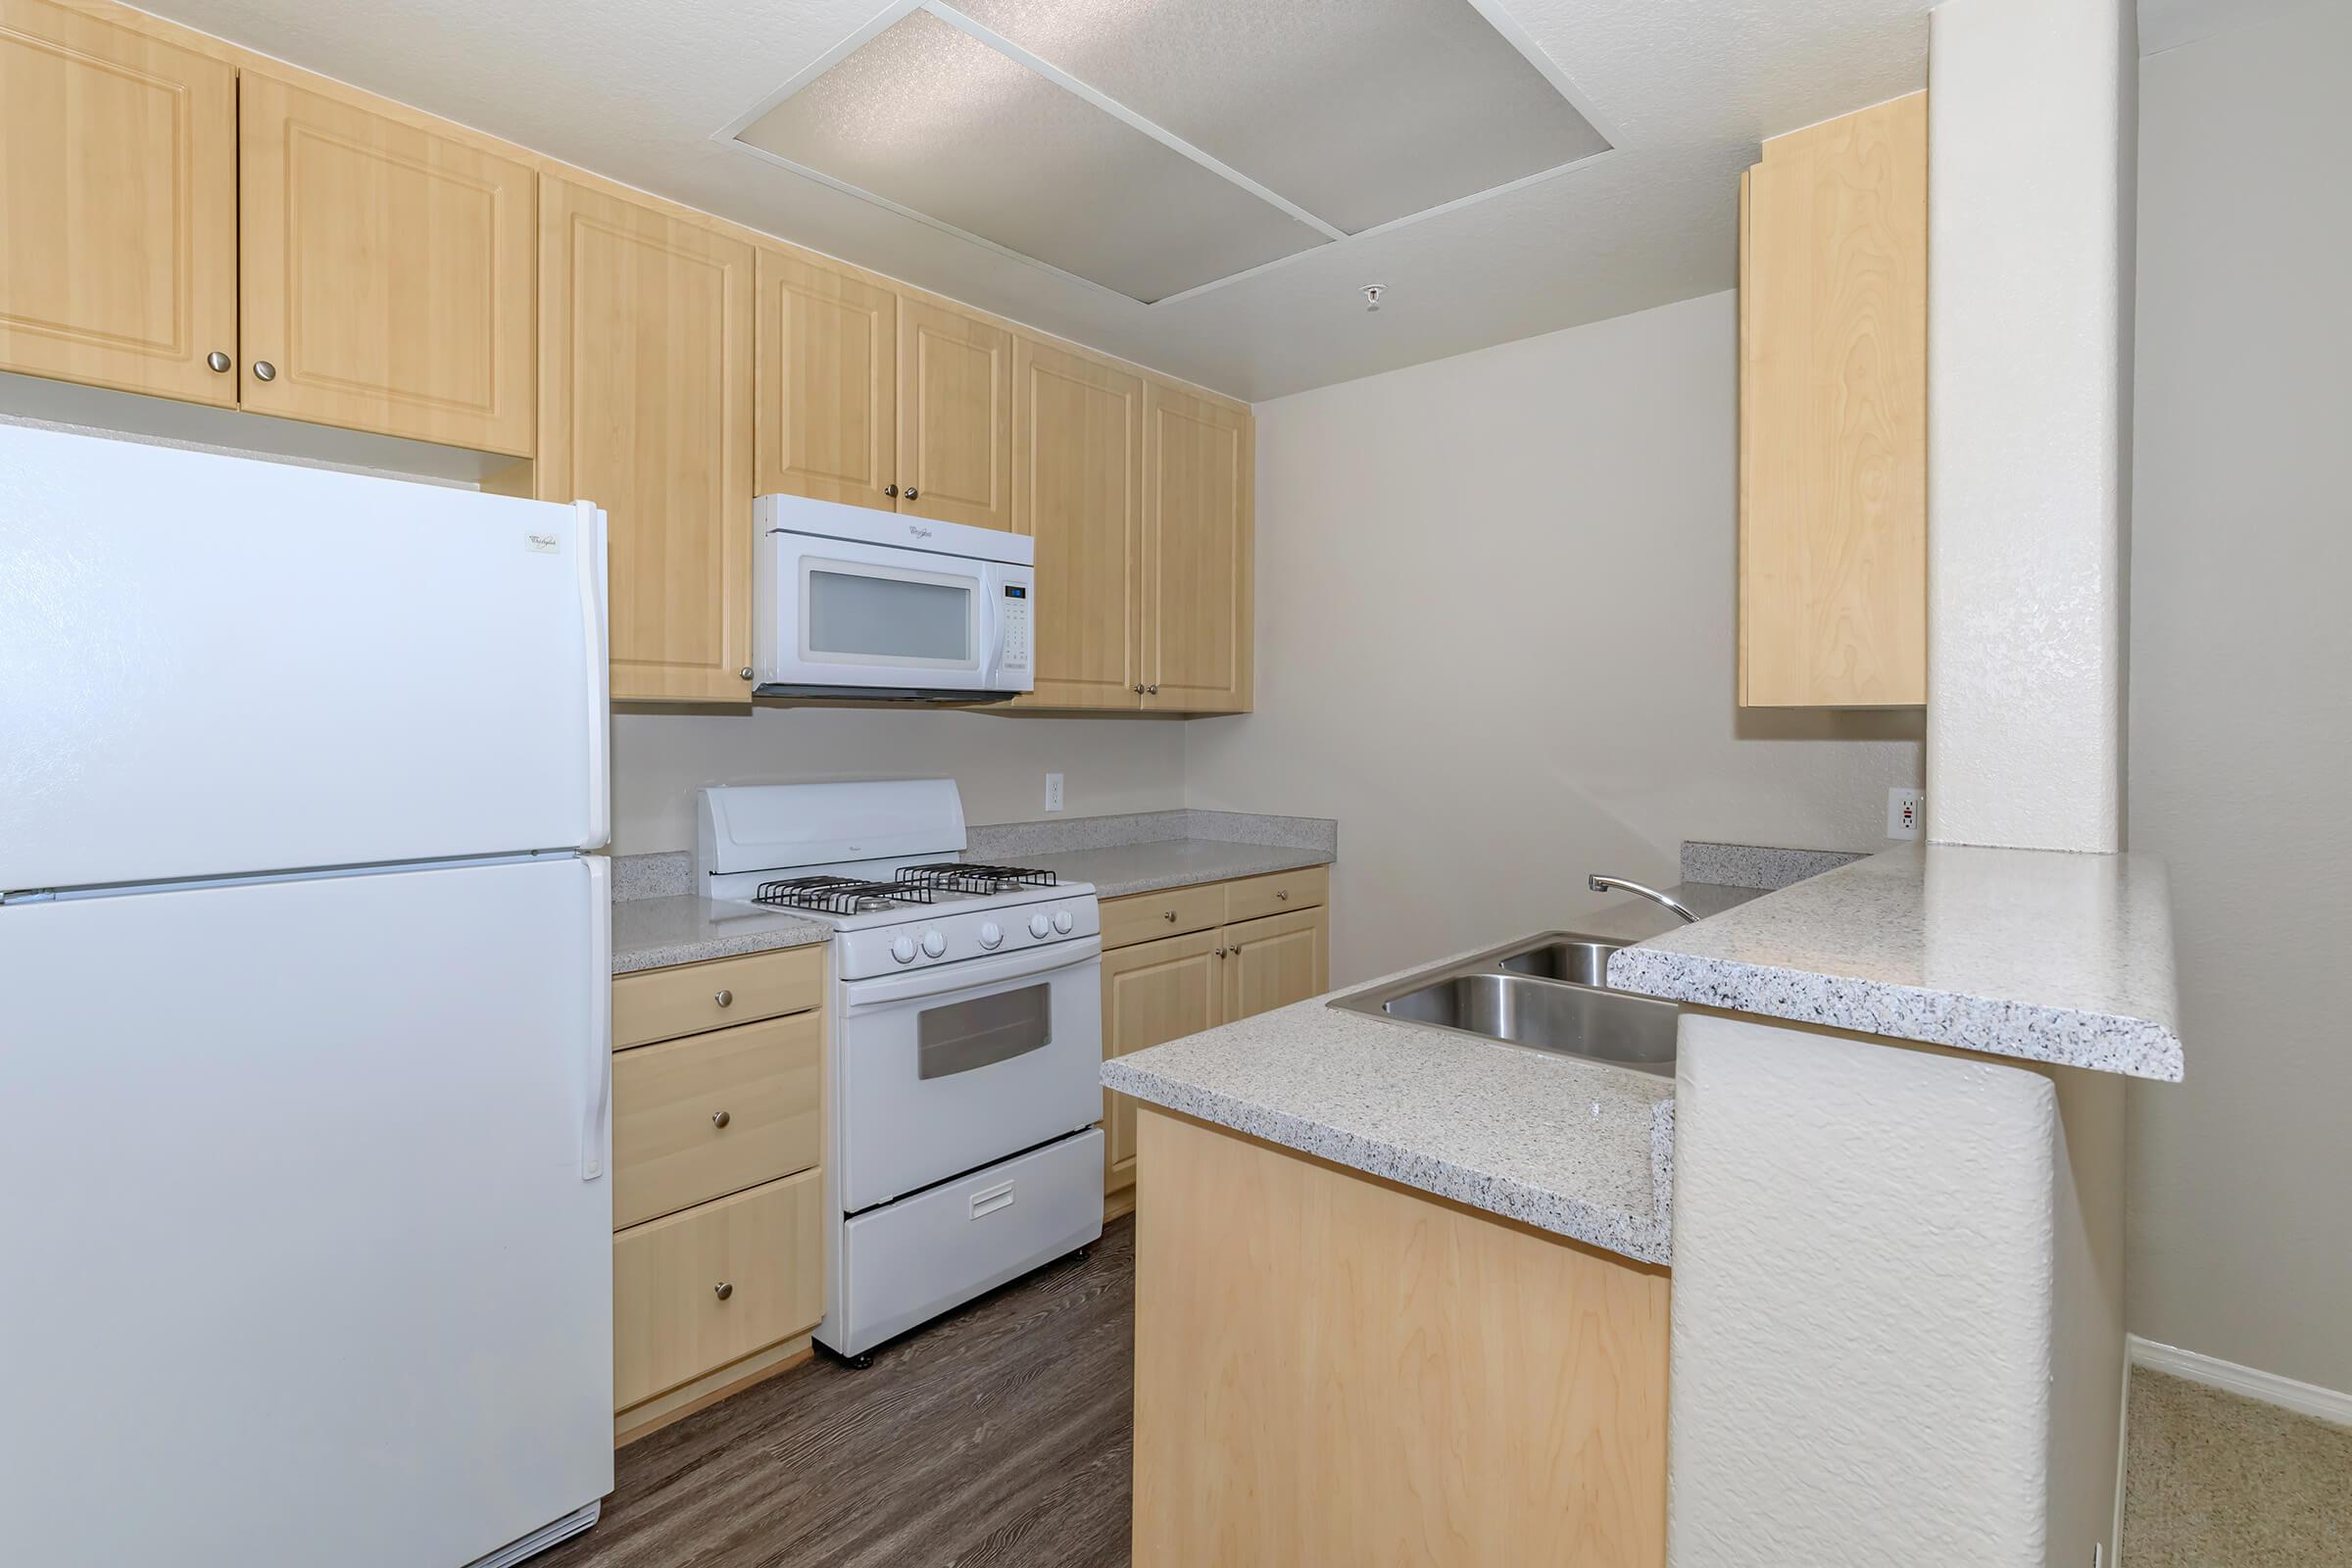 Laurel Glen Apartment Homes has custom cabinetry